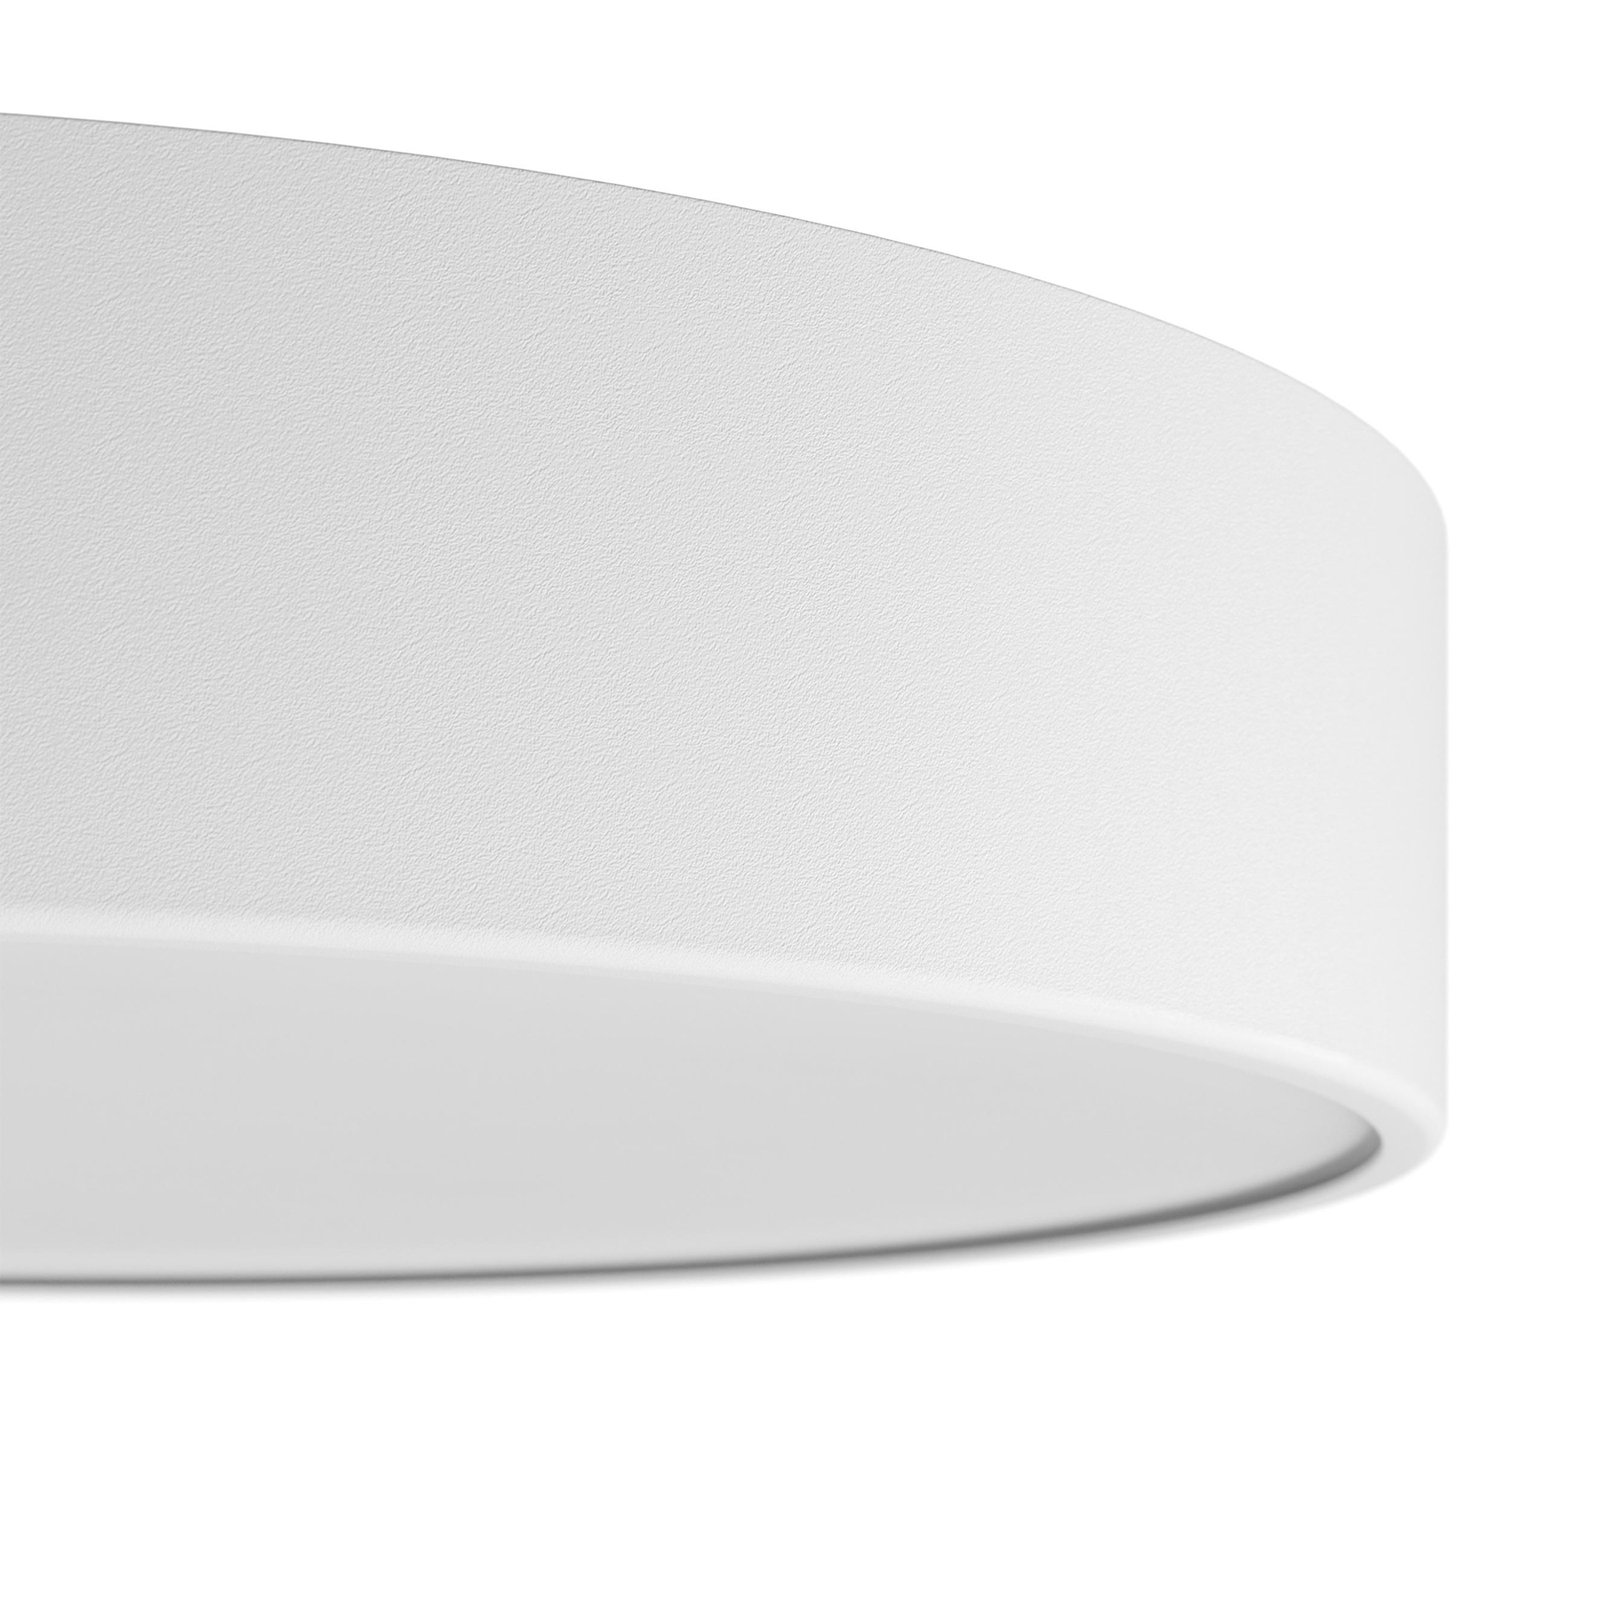 Cleo ceiling light, white, Ø 20 cm, metal, IP54